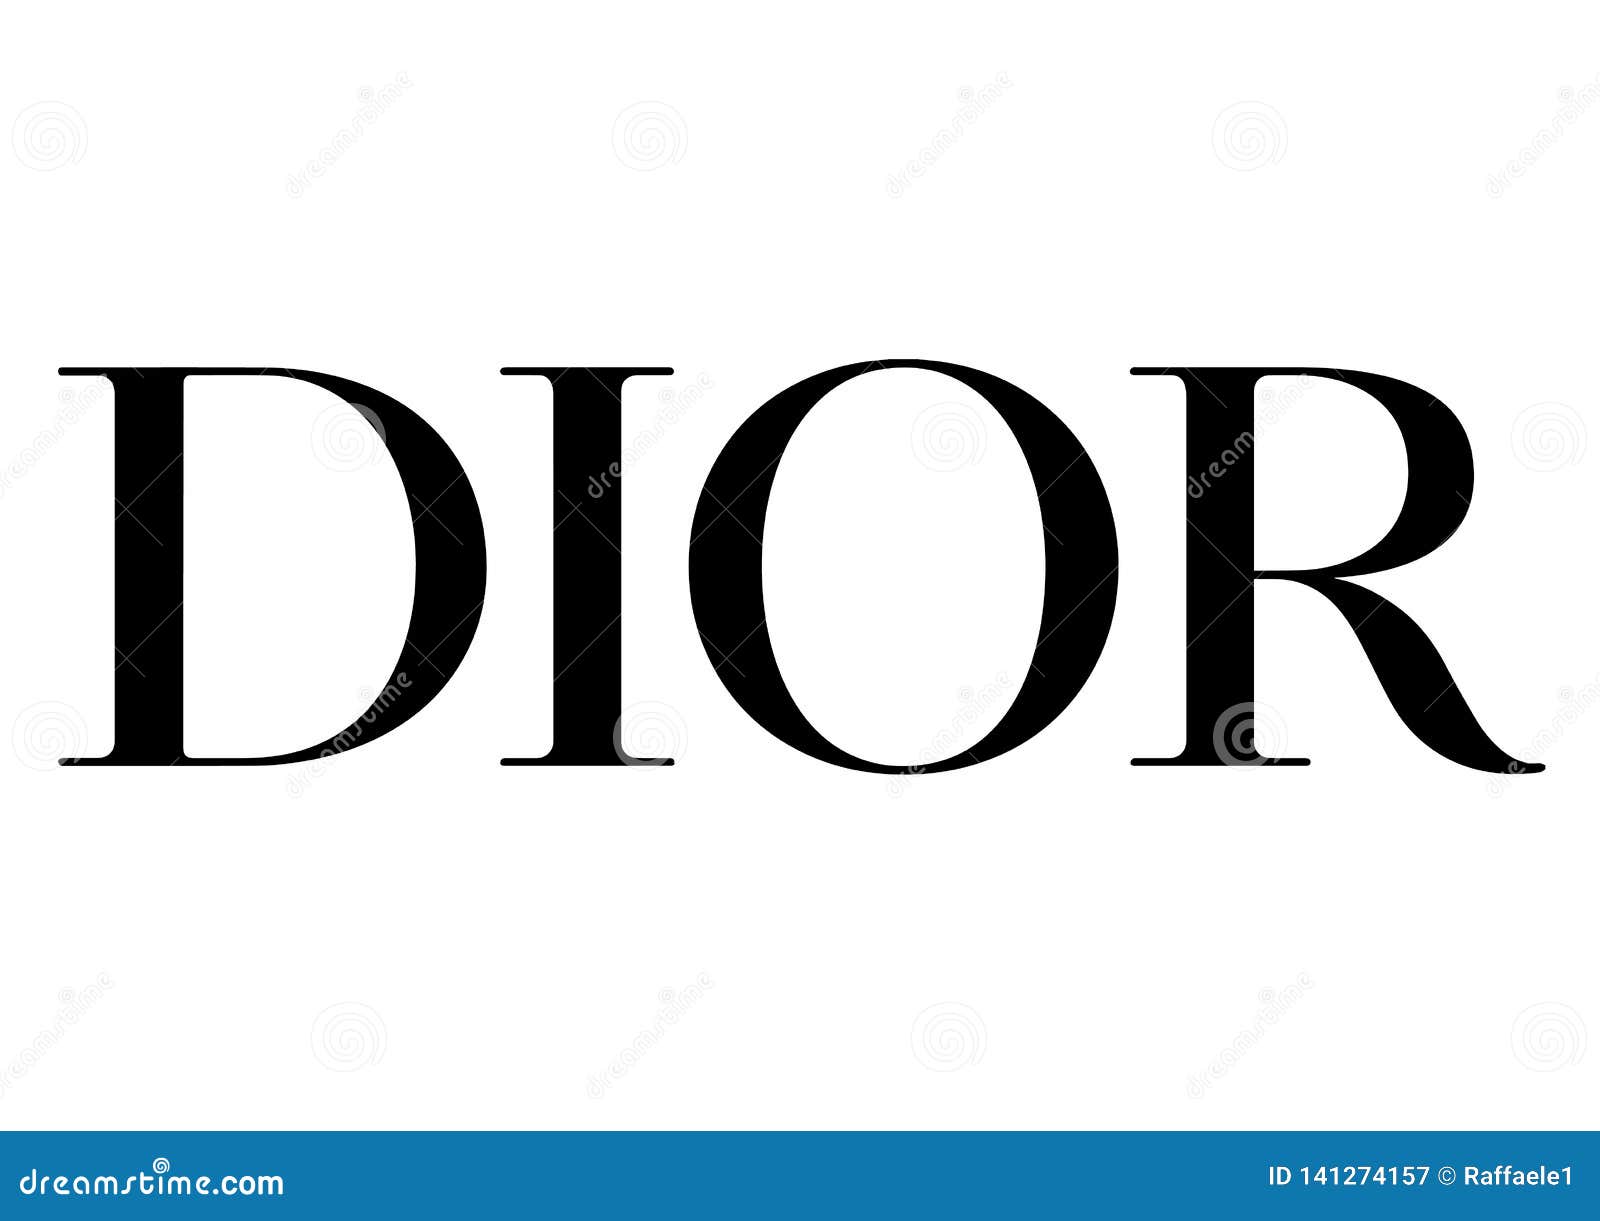 Christian Dior Paris SVG  Fashion logo branding, Paris logo, Fashion logo